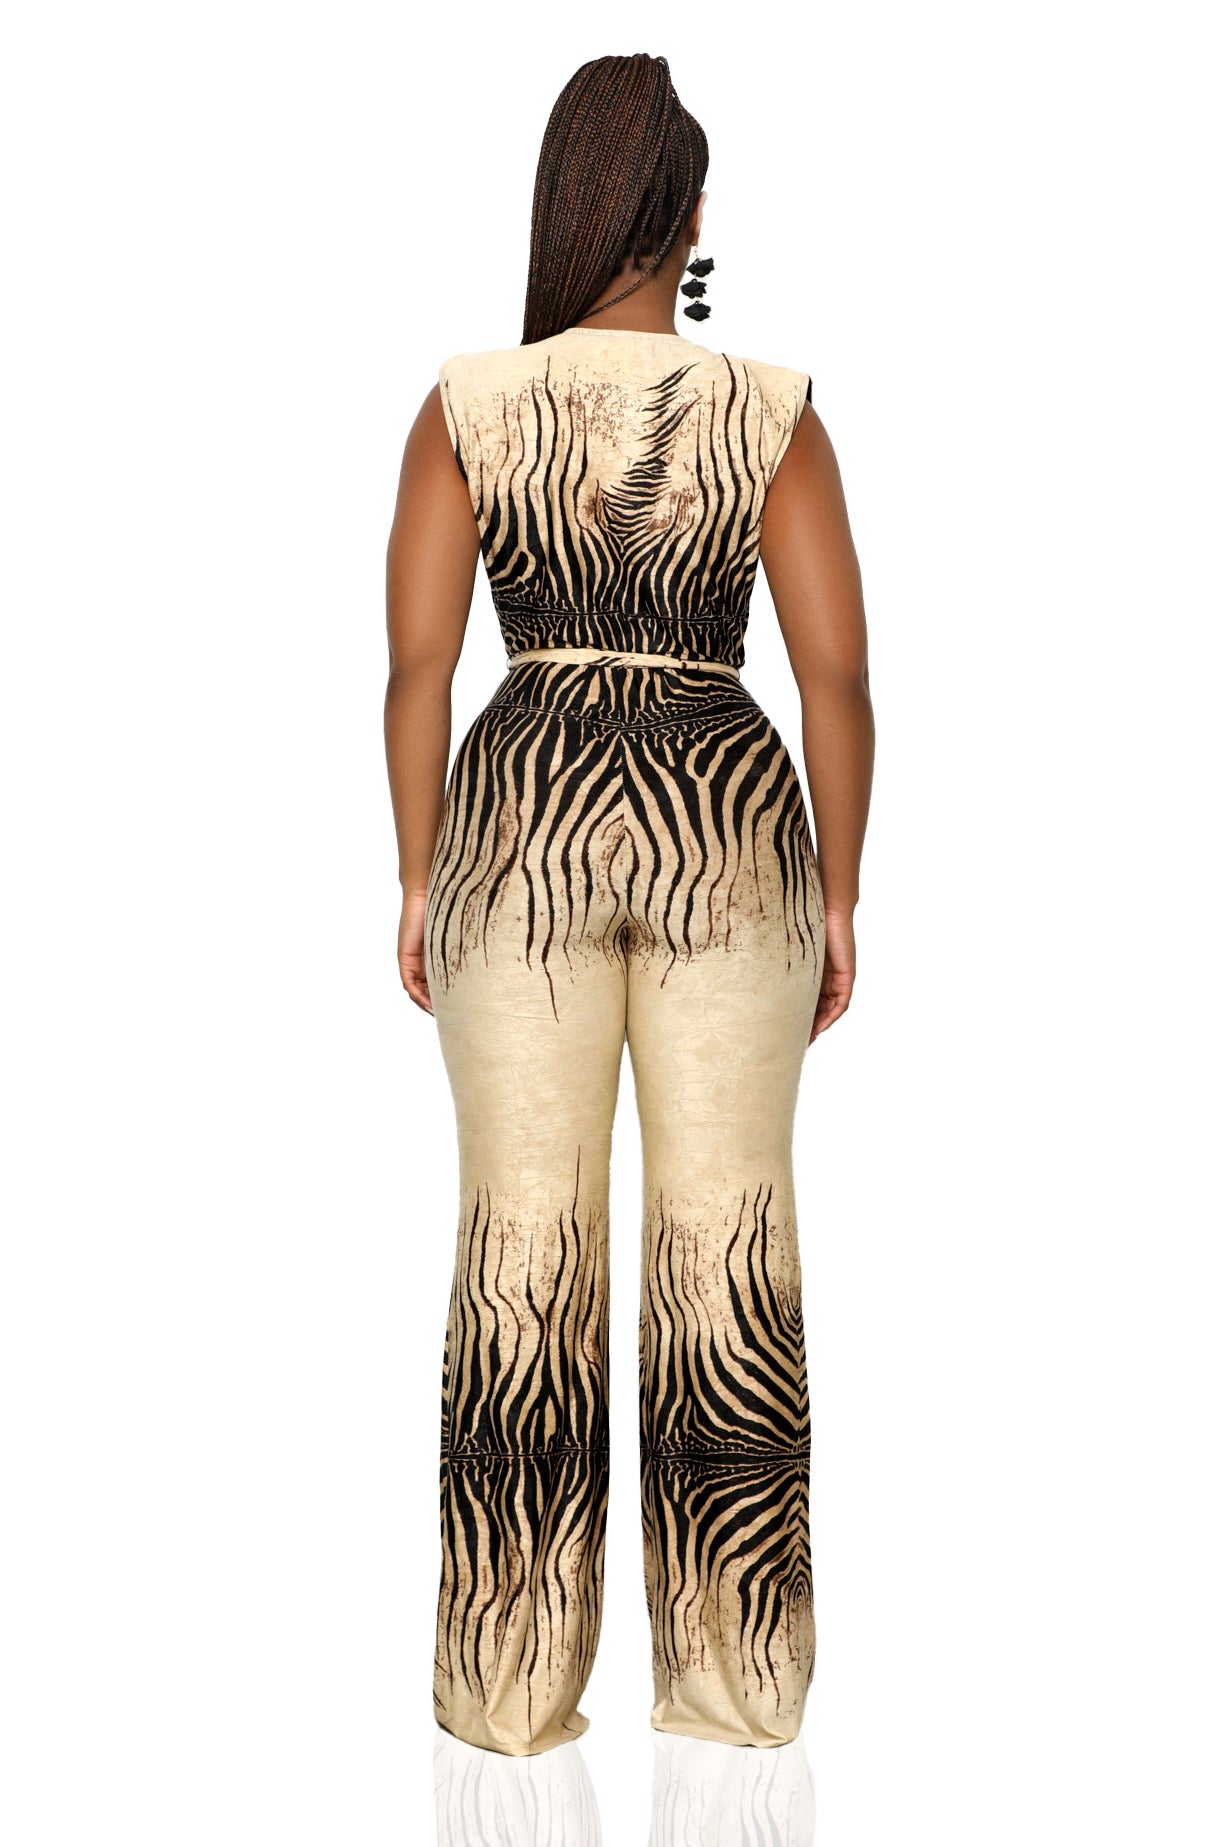 Zebra Safari Jumpsuit (Tan Multi)